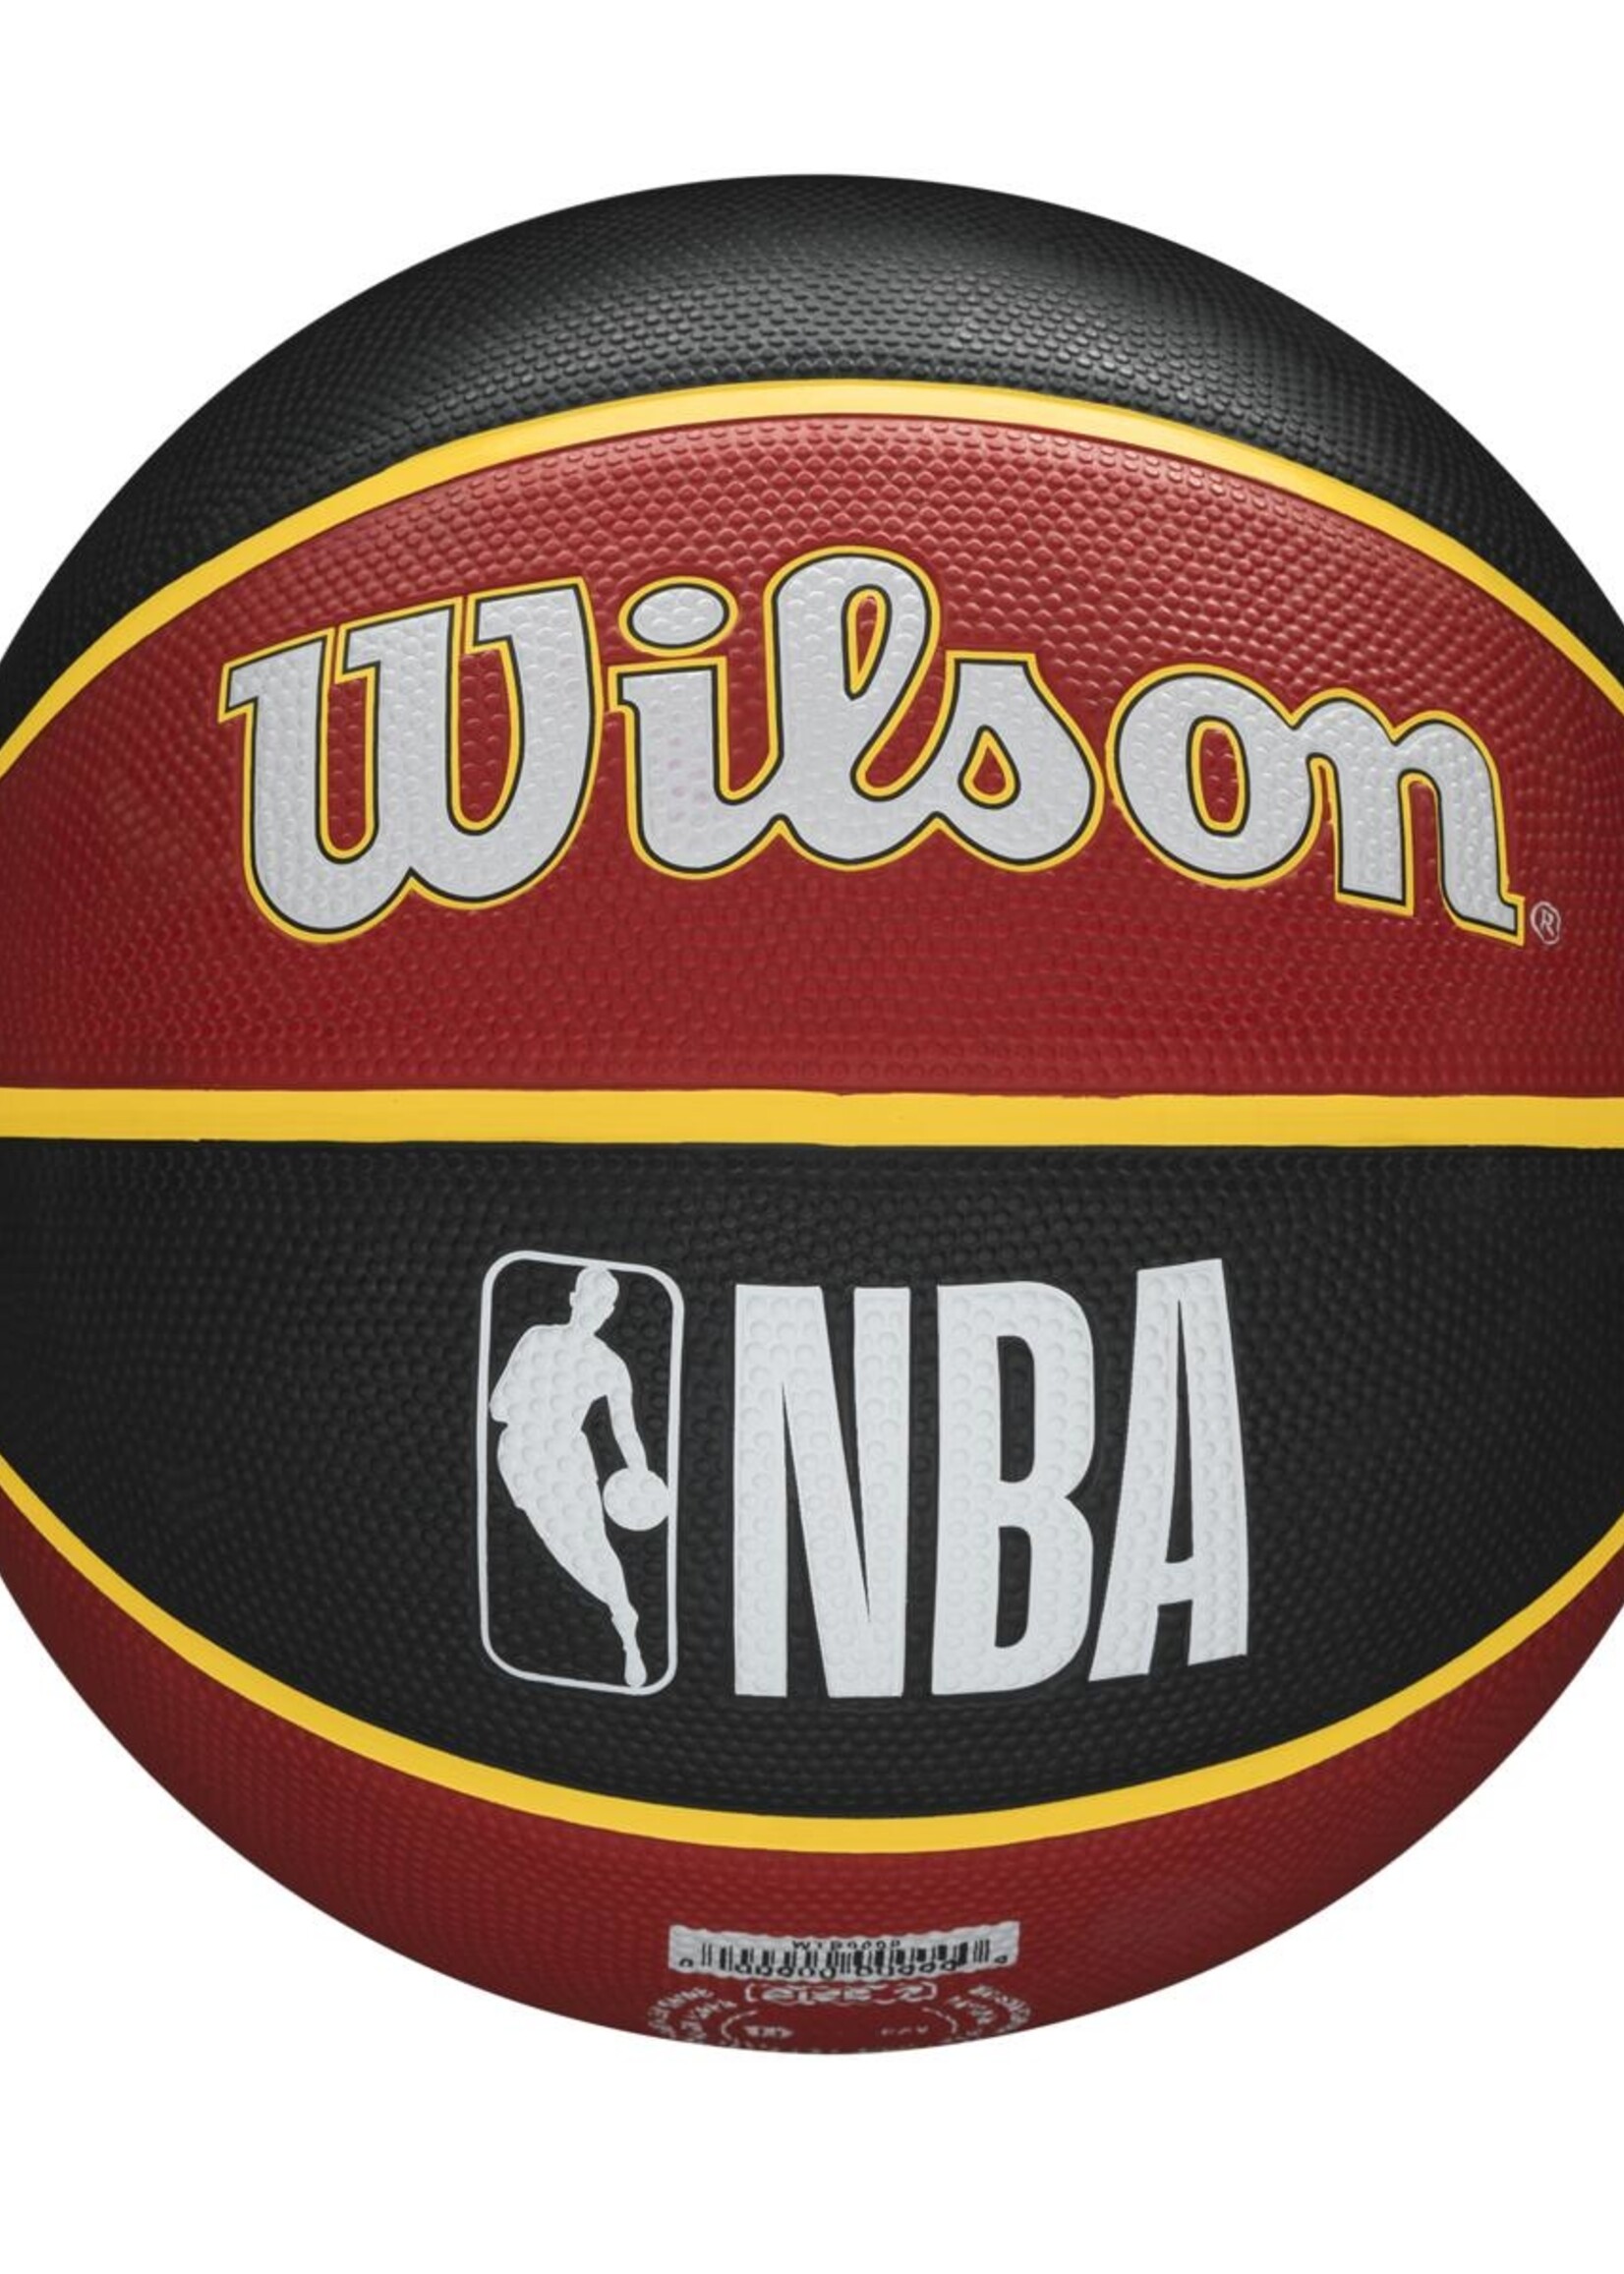 Wilson Wilson NBA Atlanta Hawks Tribute Outdoor Basketball (7)